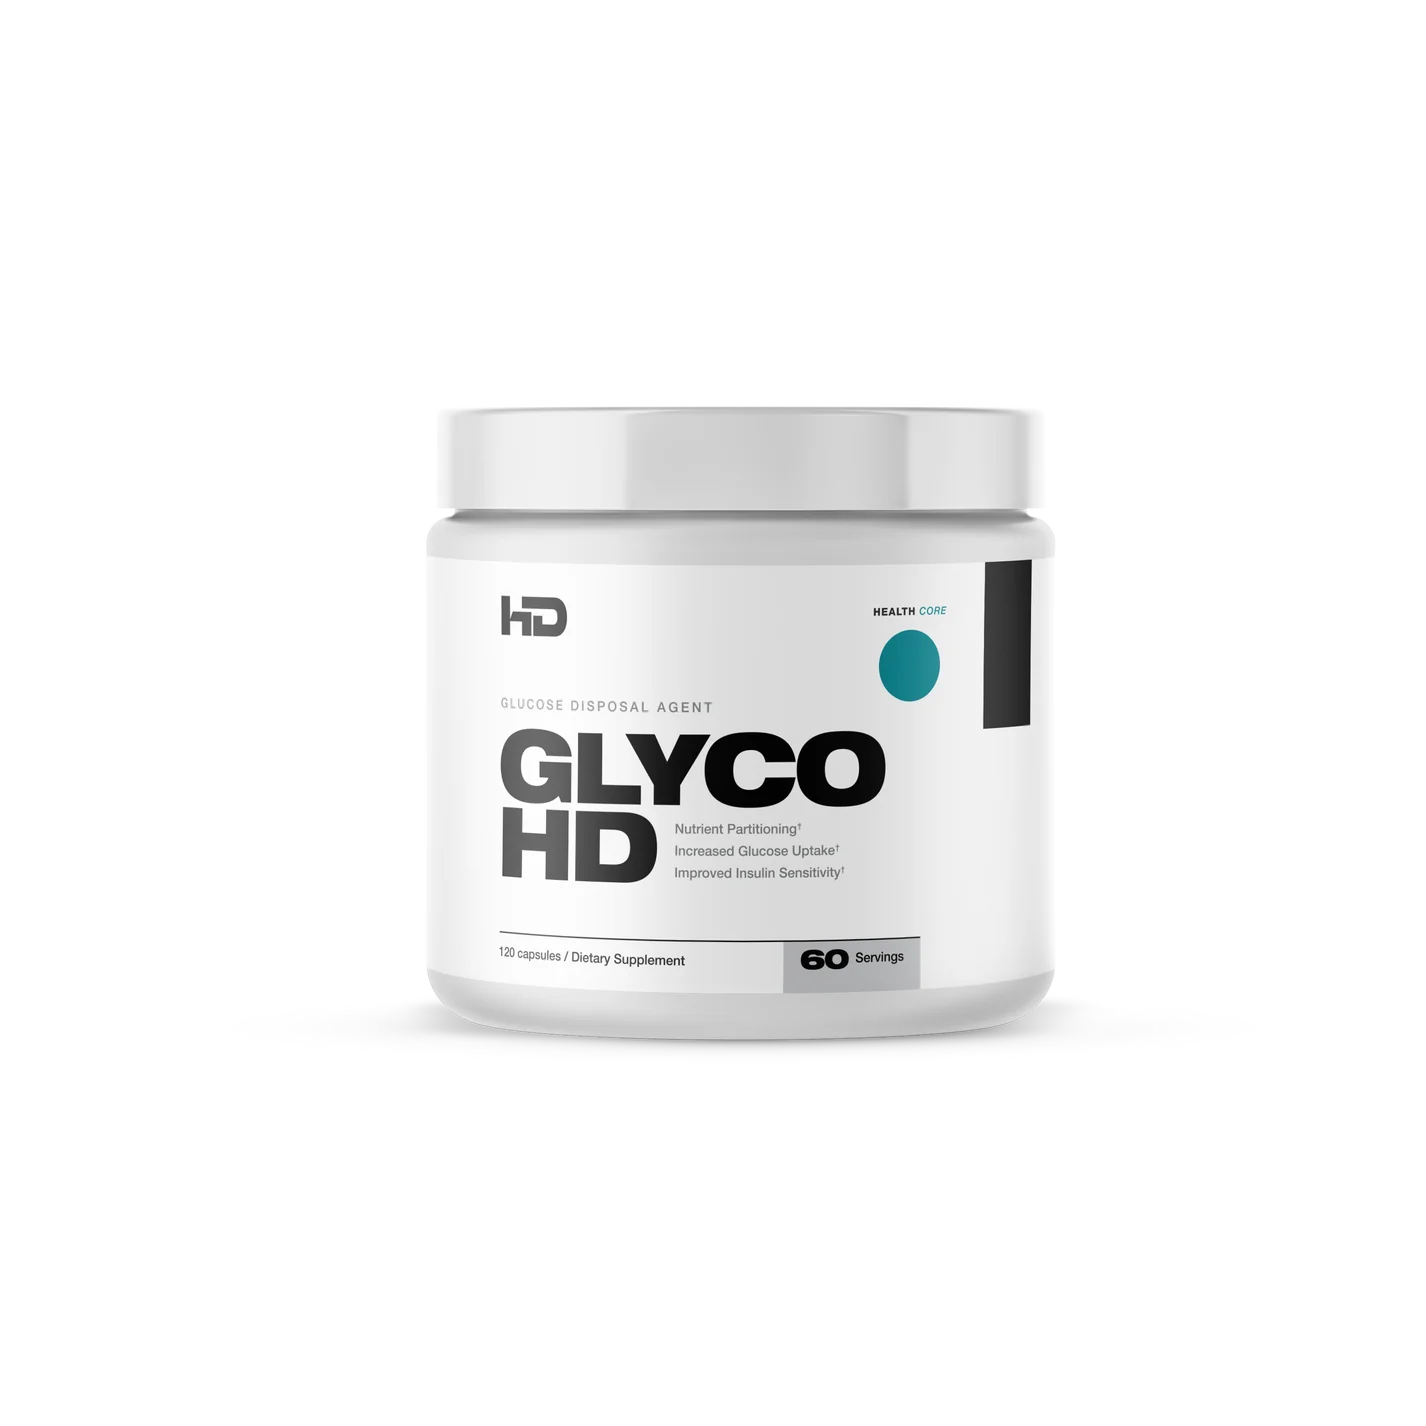 HD-GLYCOHD